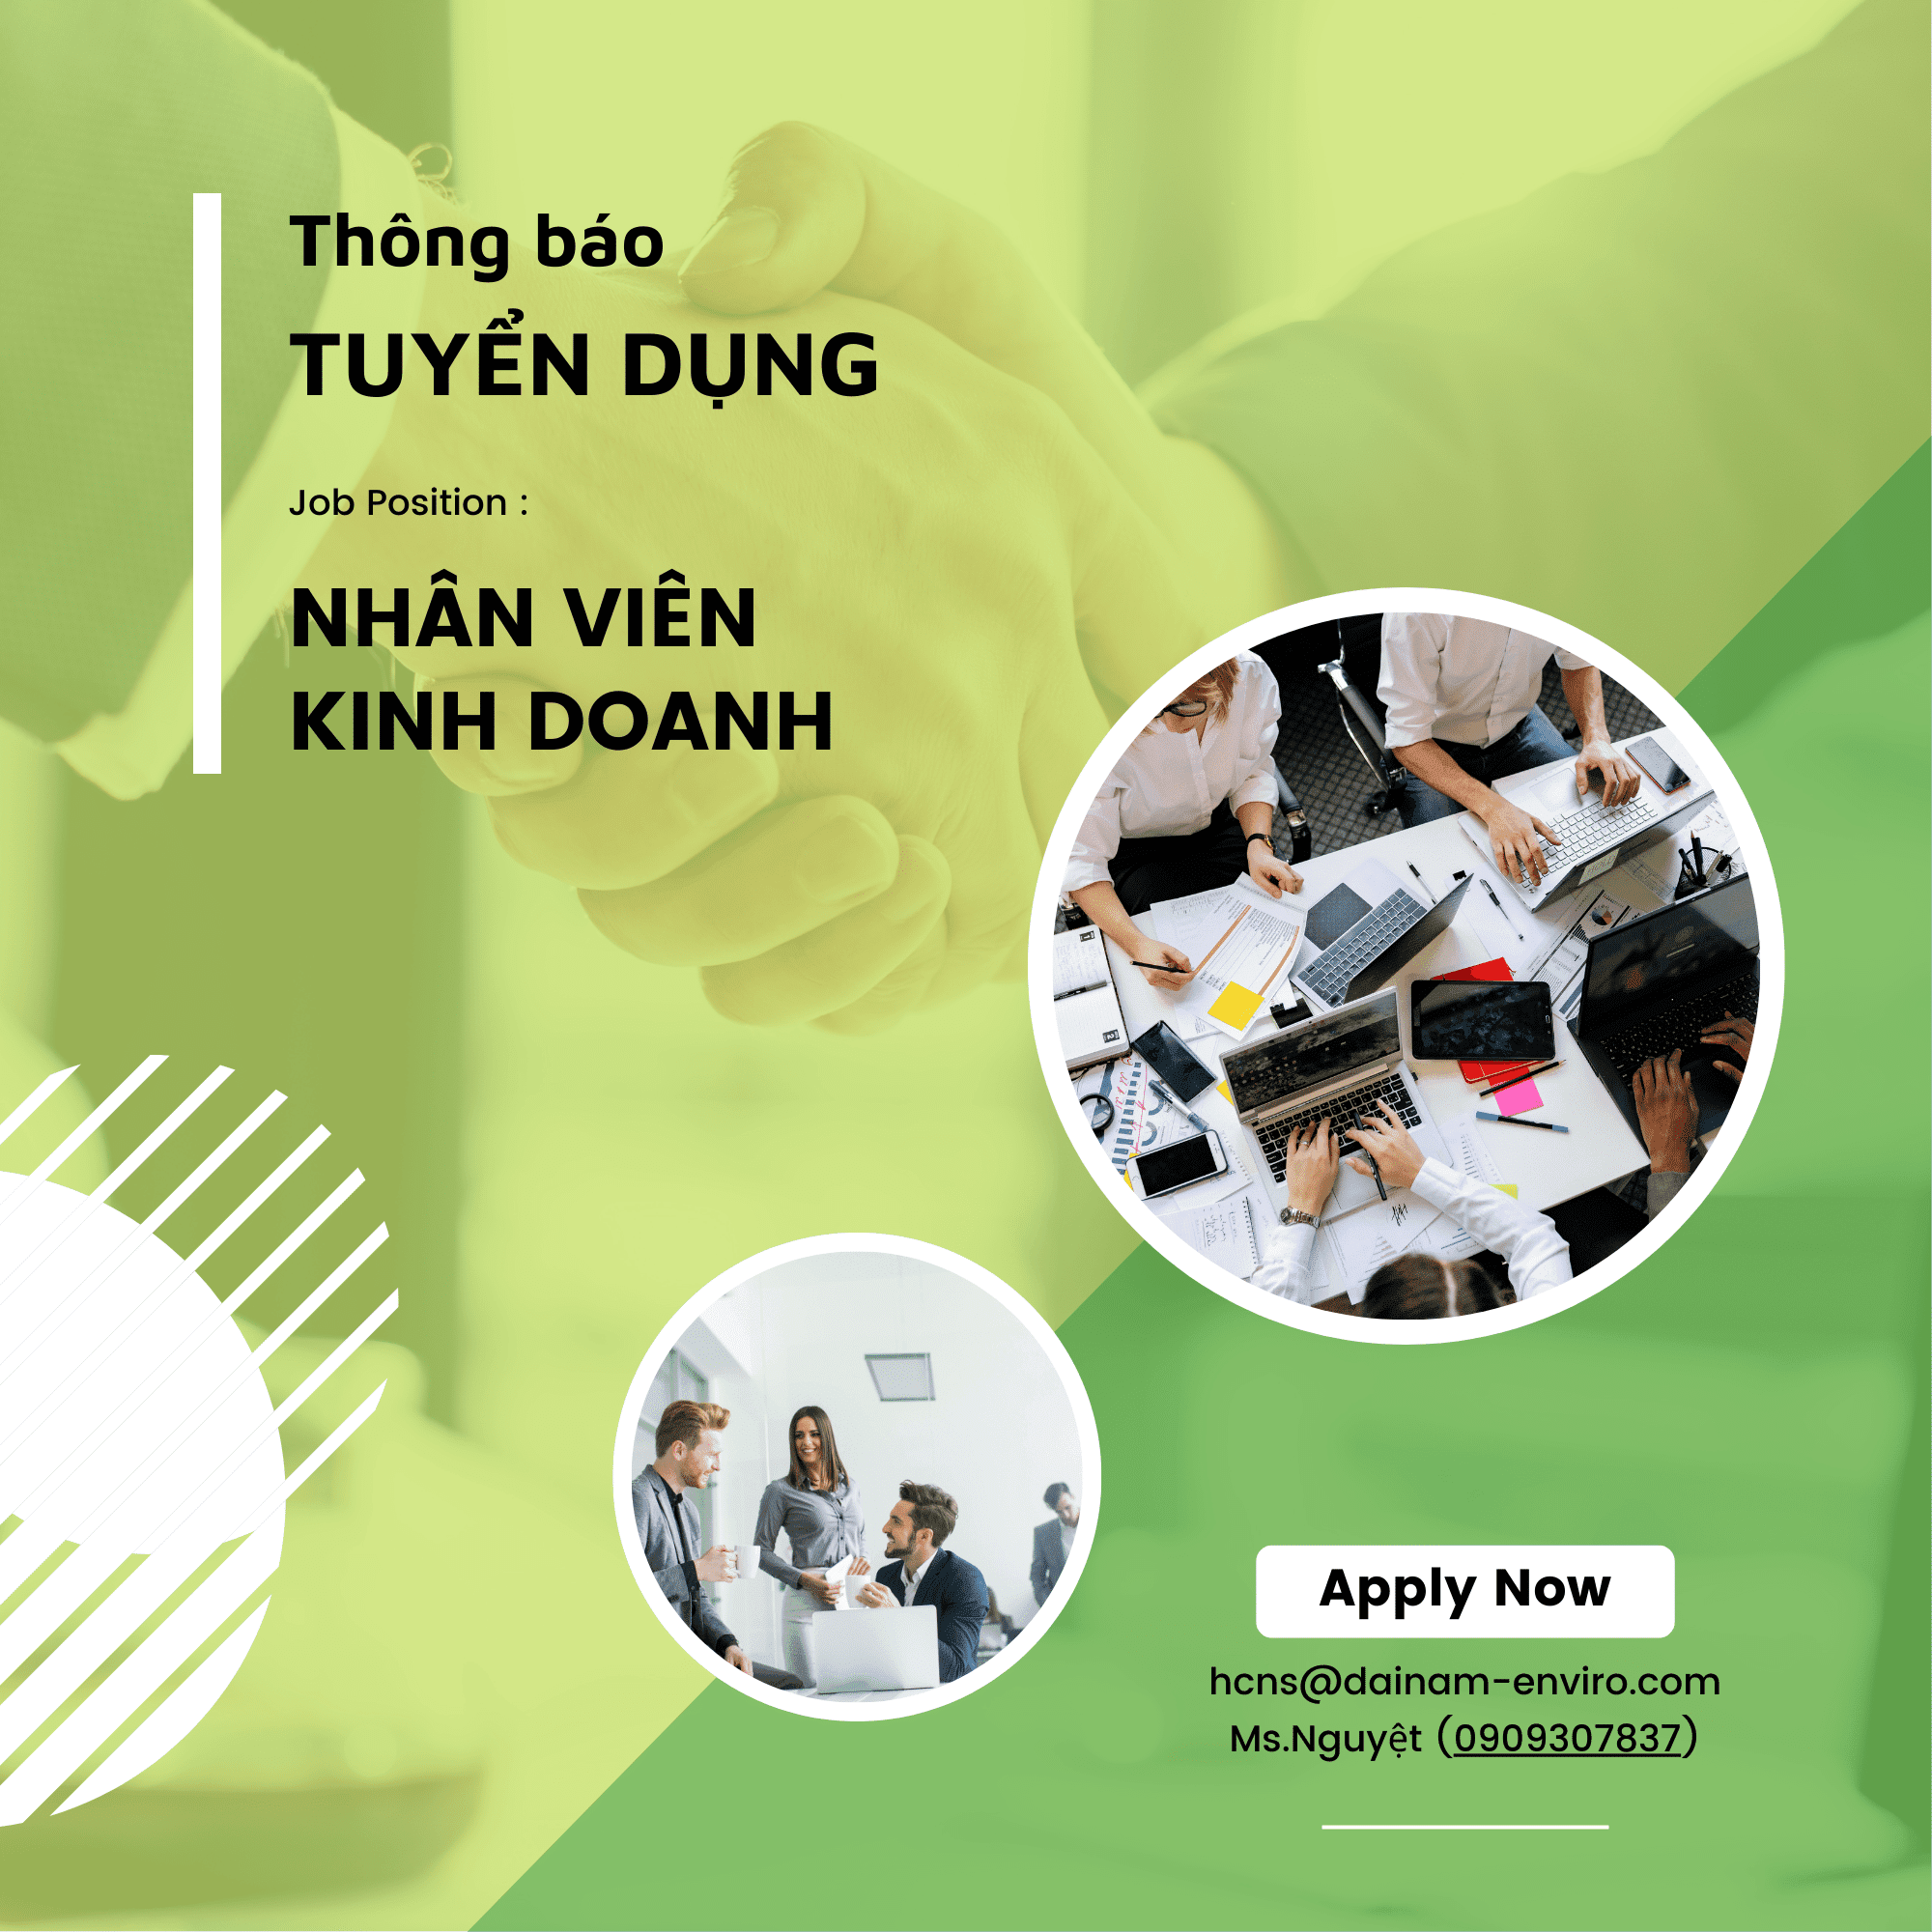 Recruitment Project Sales staff - Ho Chi Minh City area